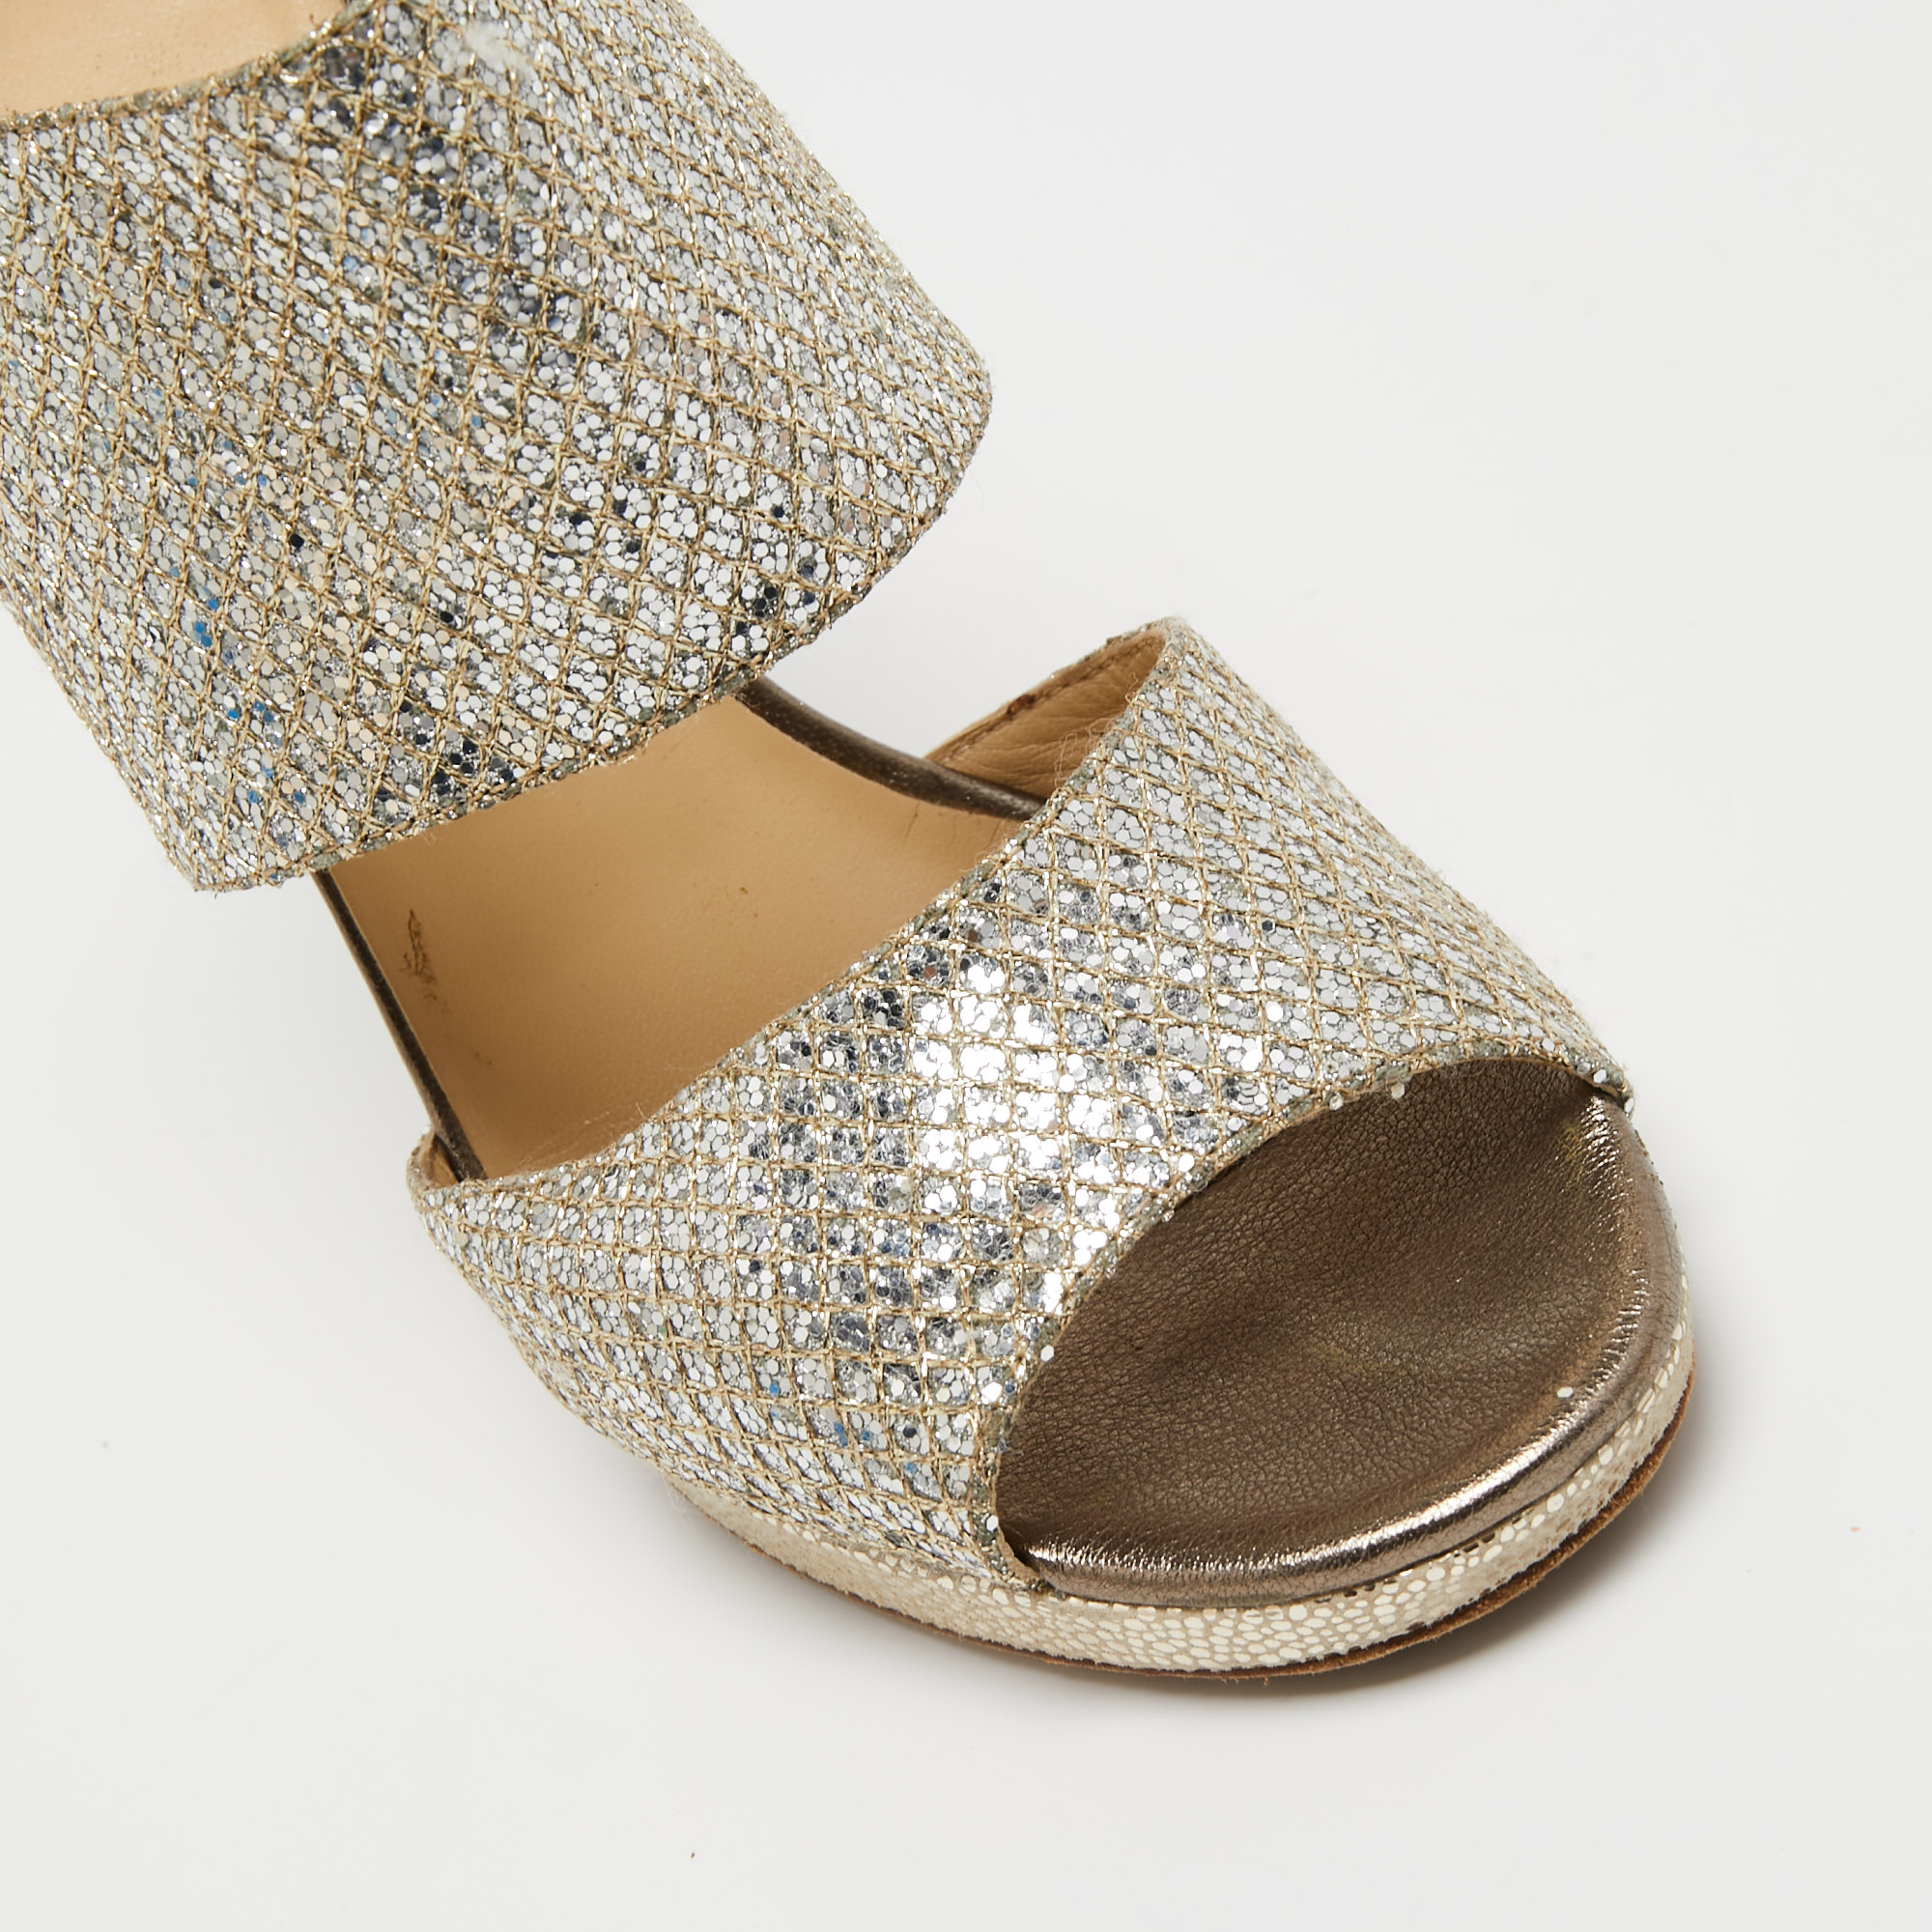 Jimmy Choo Metallic Silver Glitter Private Platform Sandals Size 37